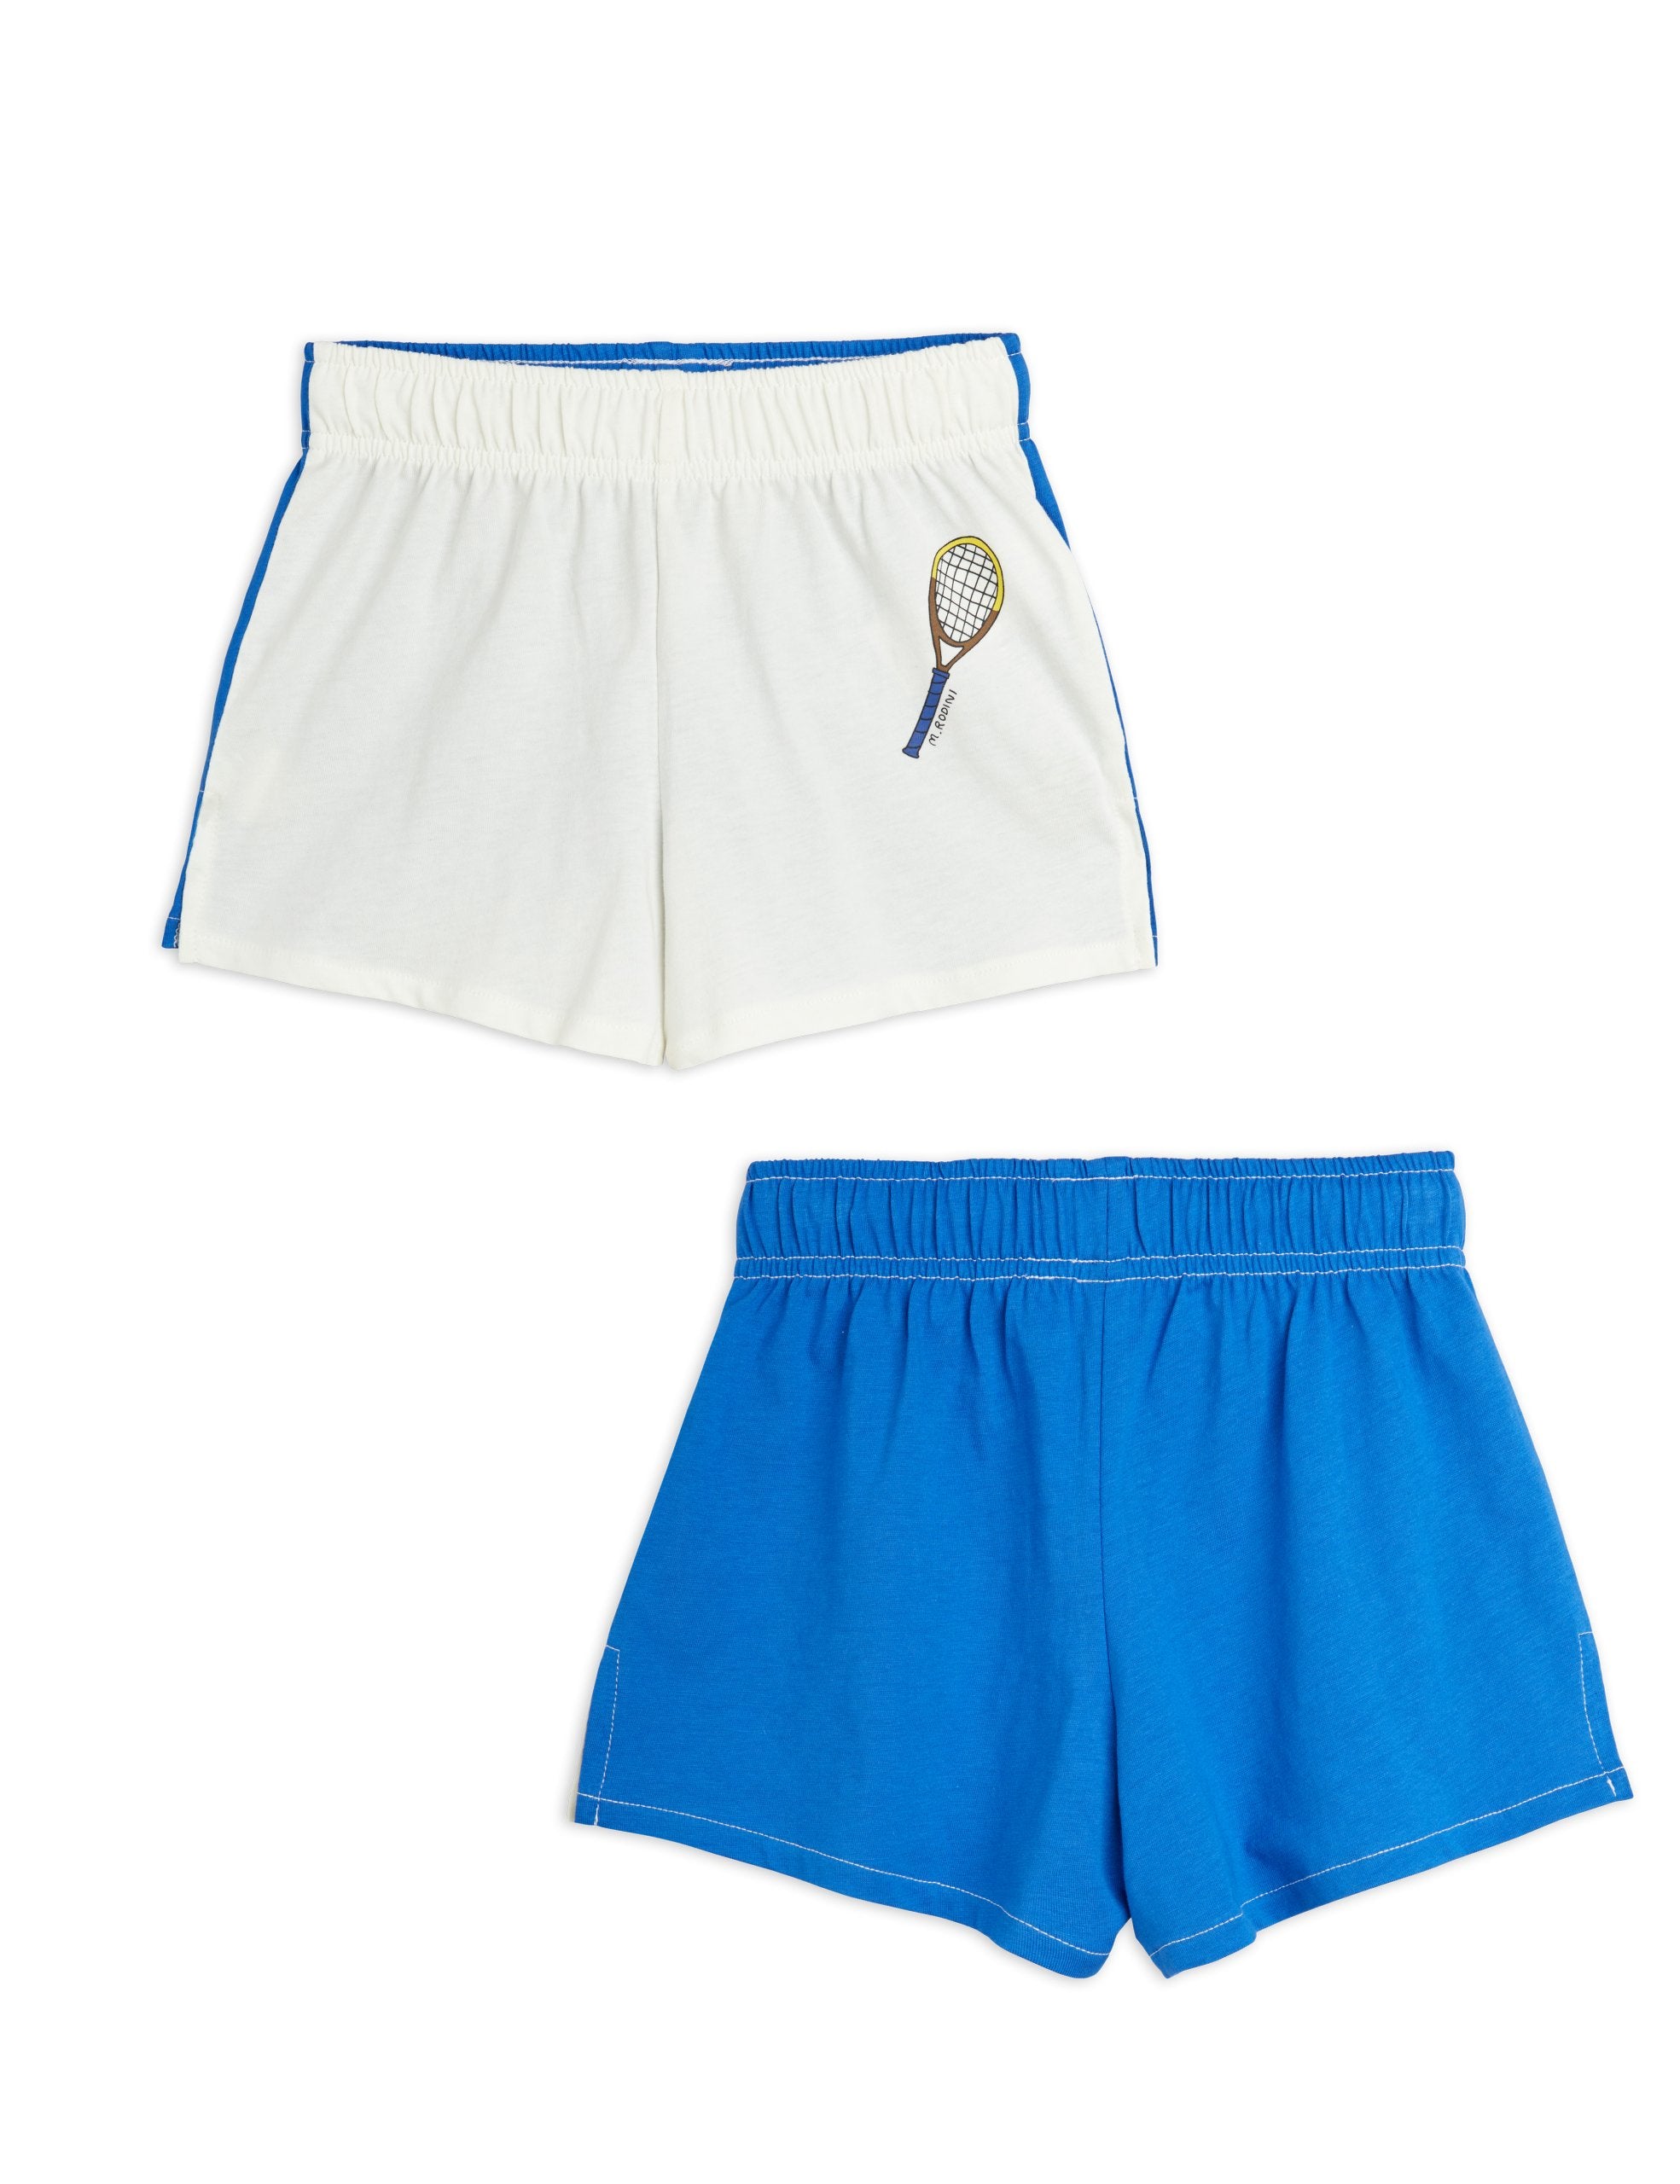 Mini Rodini Tennis Shorts - White/Blue